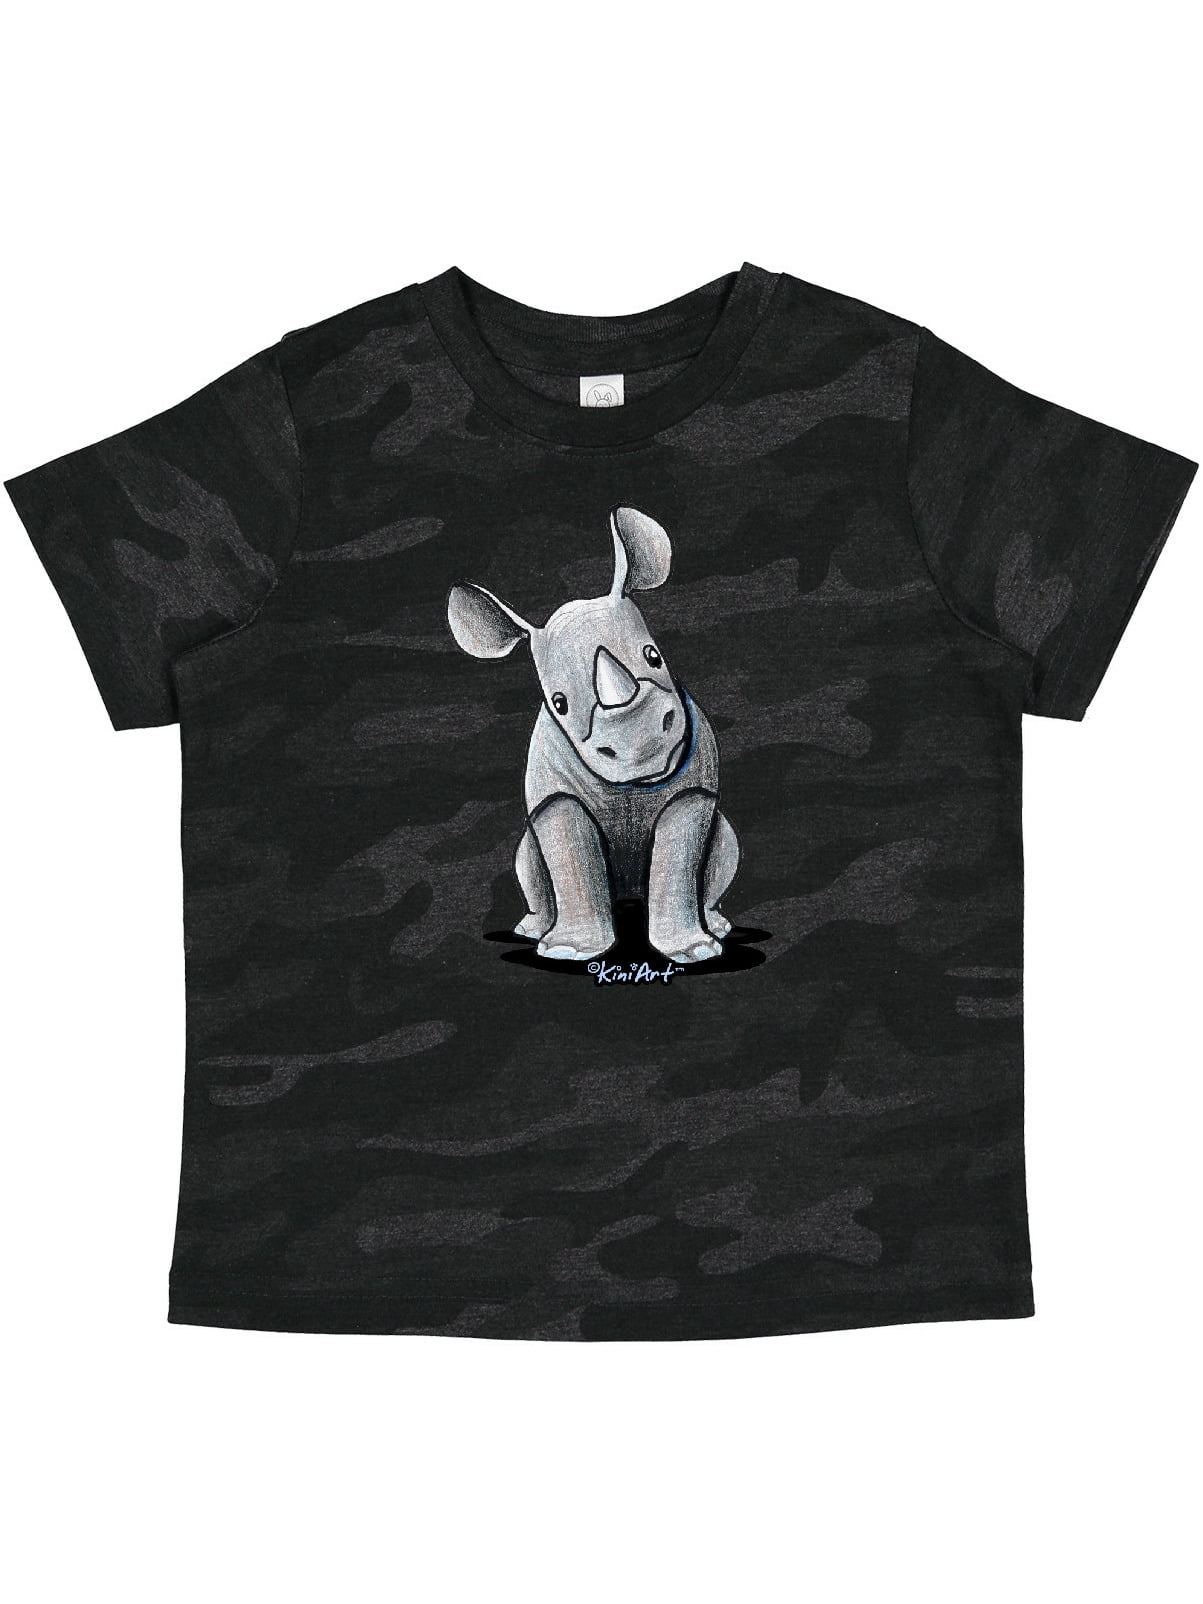 inktastic Curious Rhinos Toddler T-Shirt KiniArt 